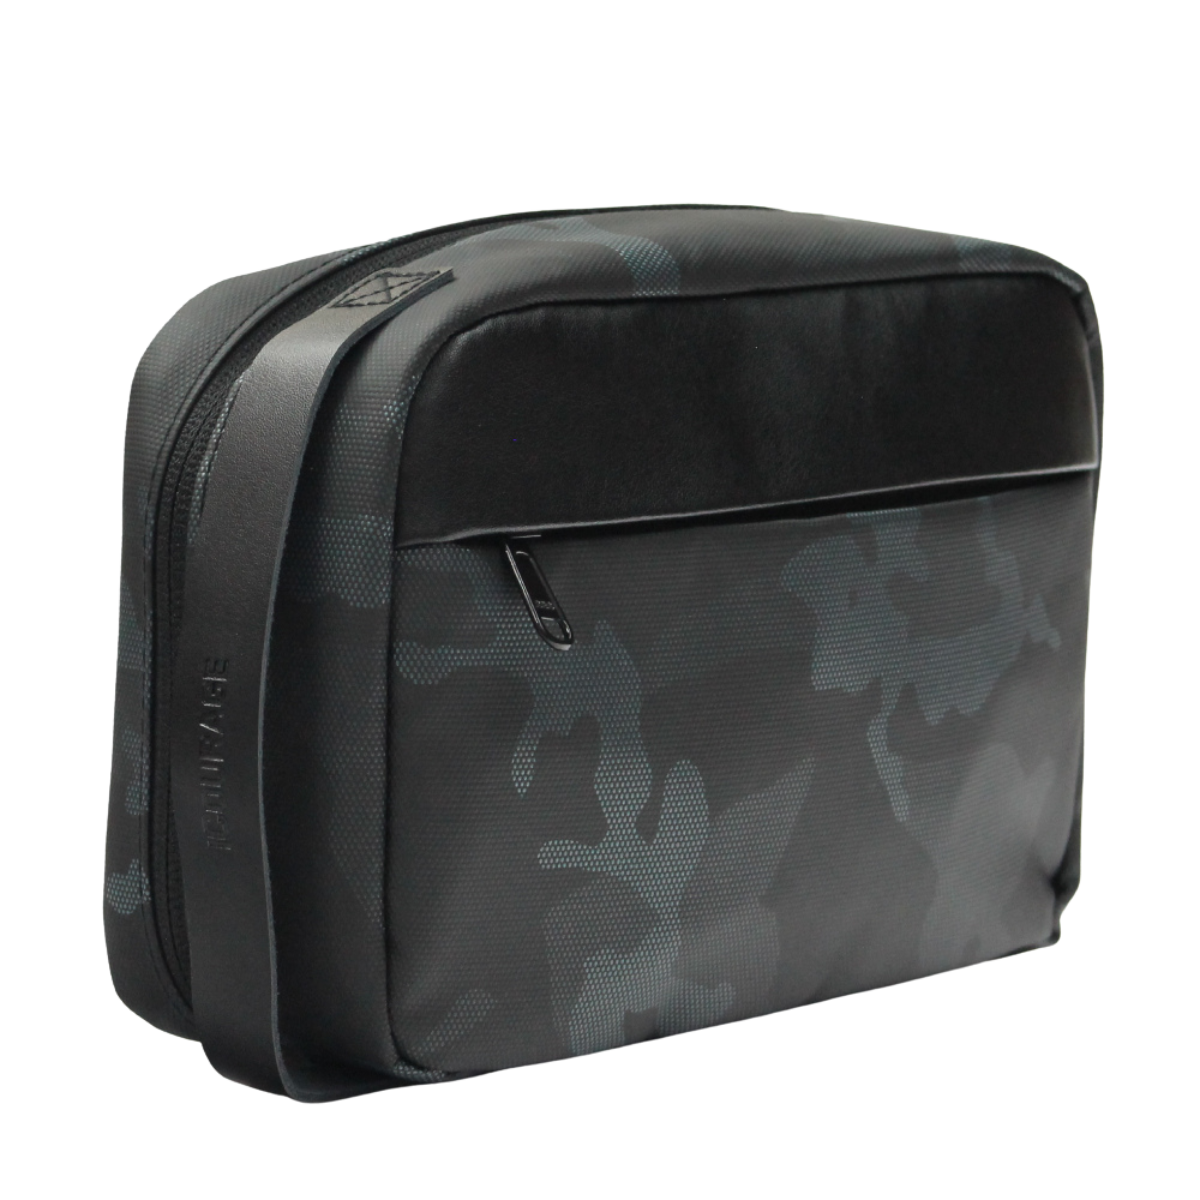 ICourage portable handbag